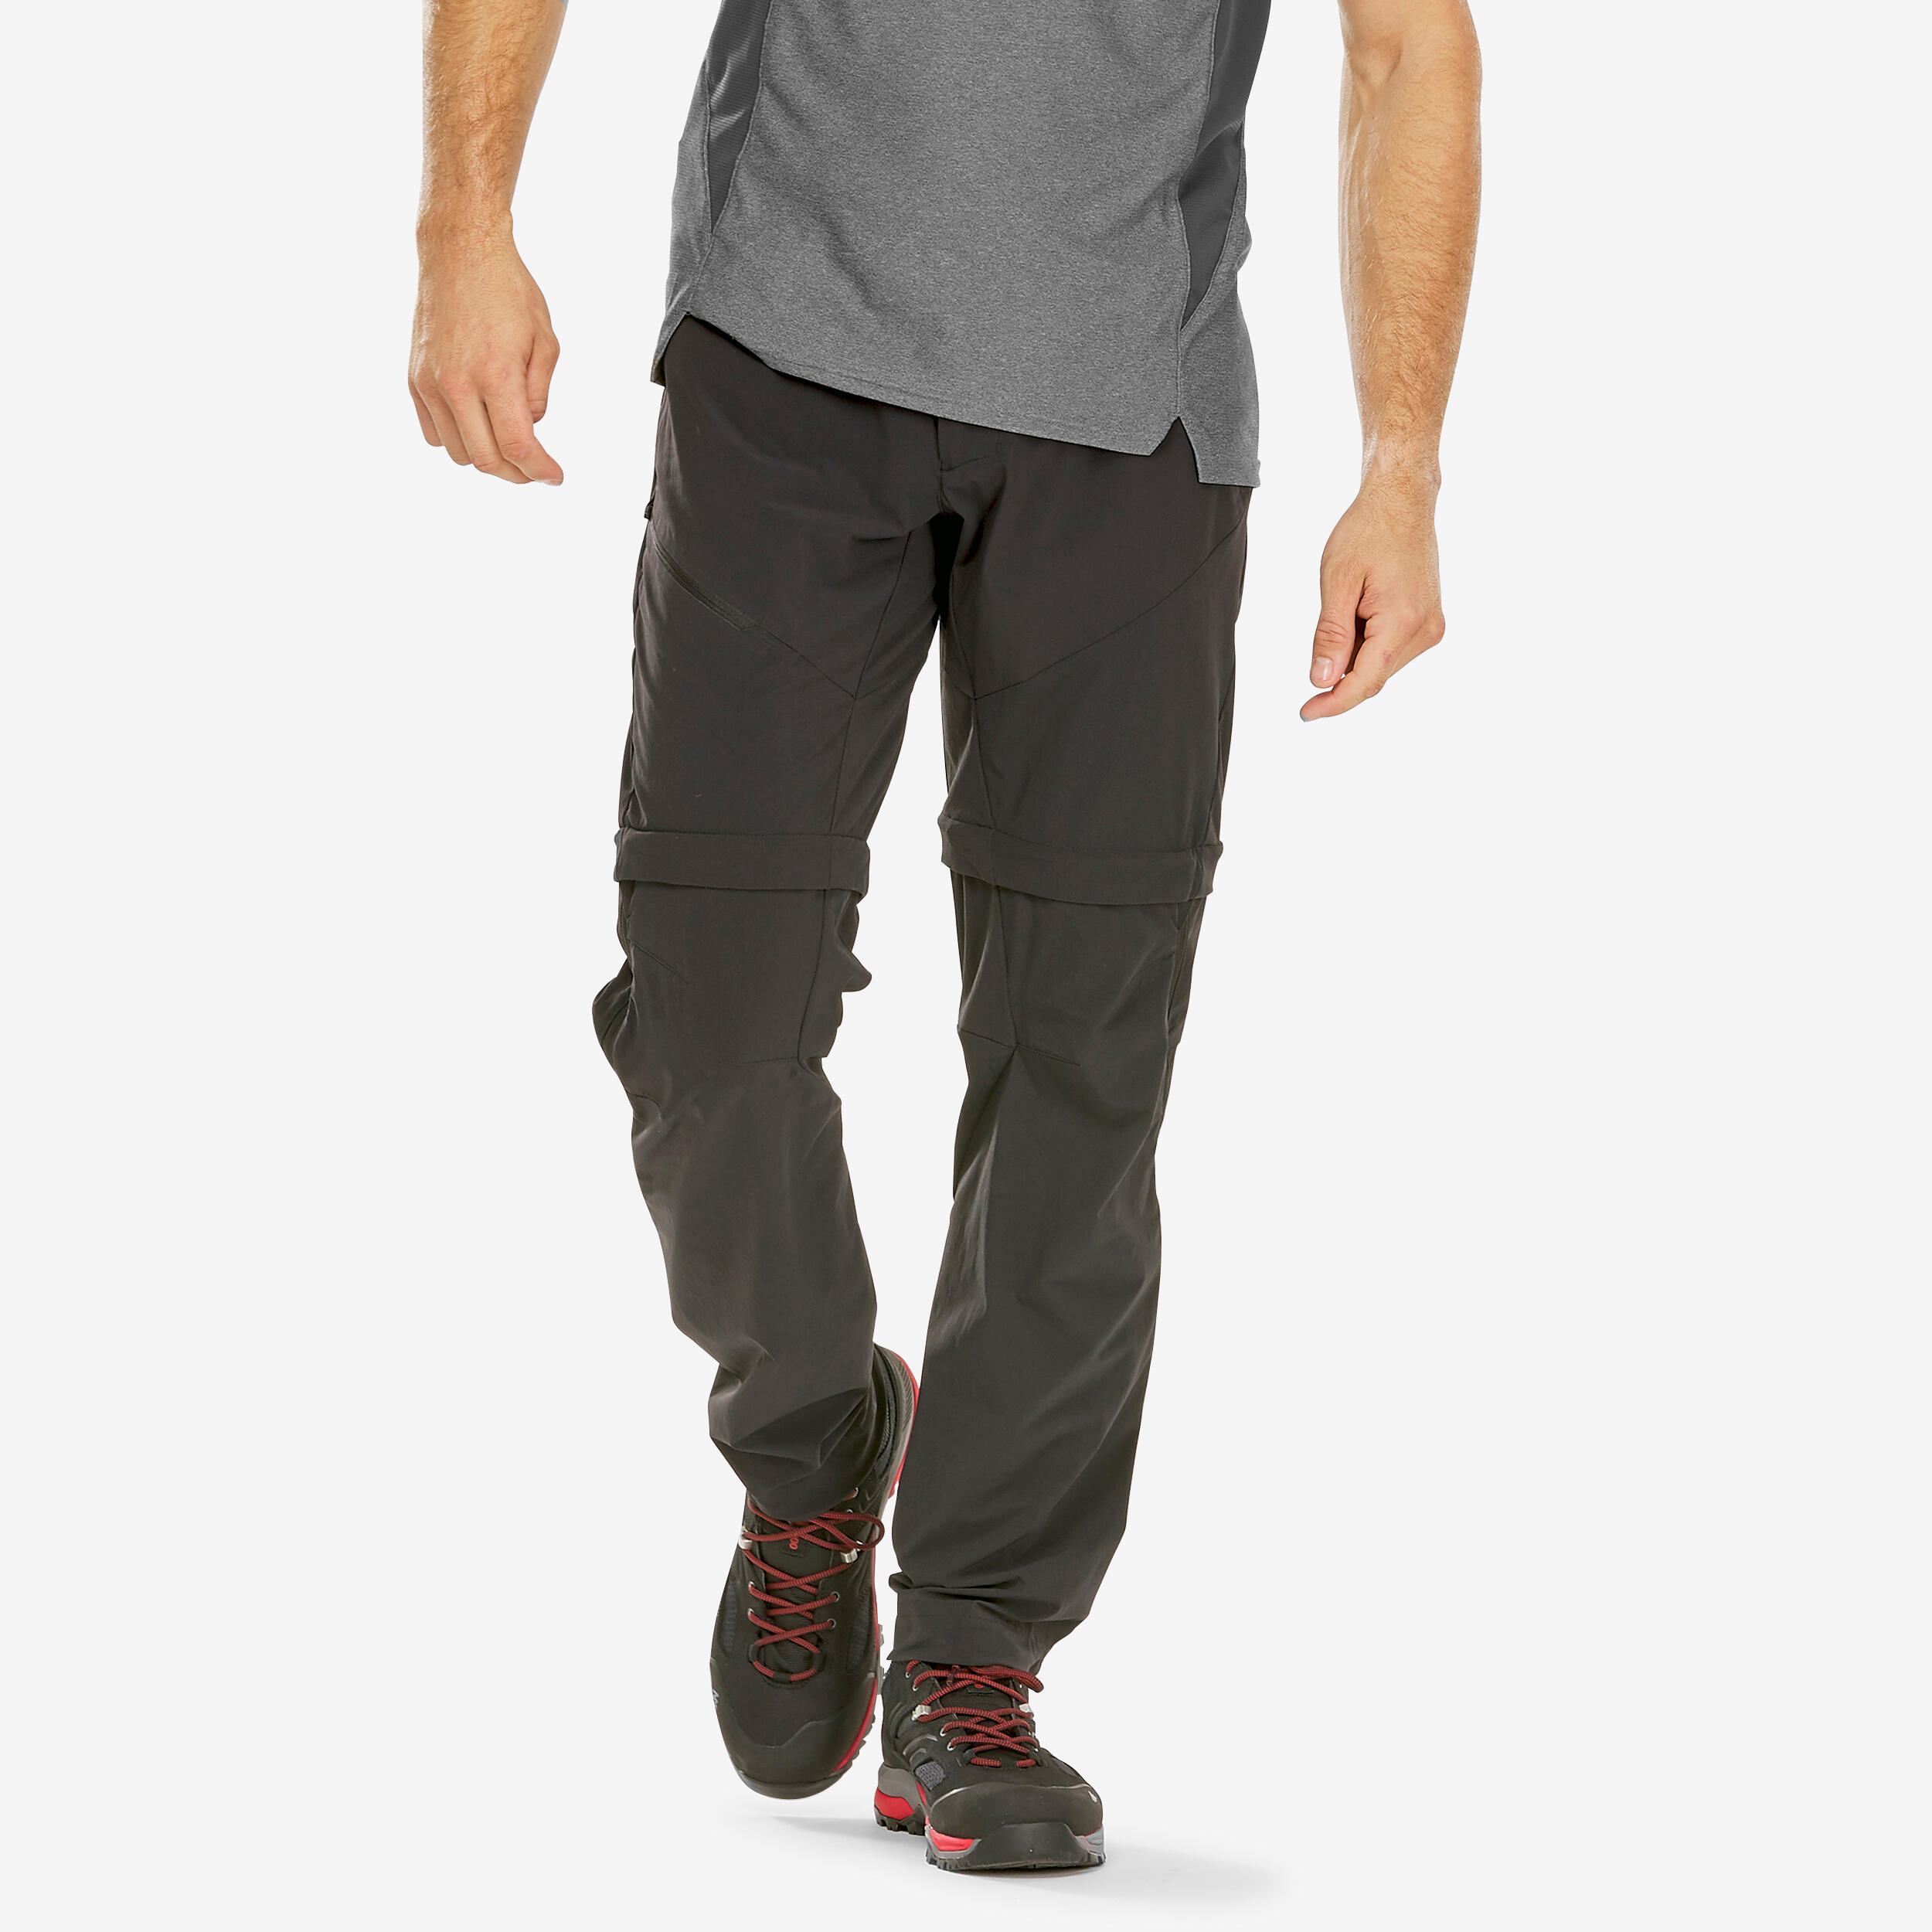 Men's Warm Pants - SH 100 Grey - [EN] graphite grey - Quechua - Decathlon